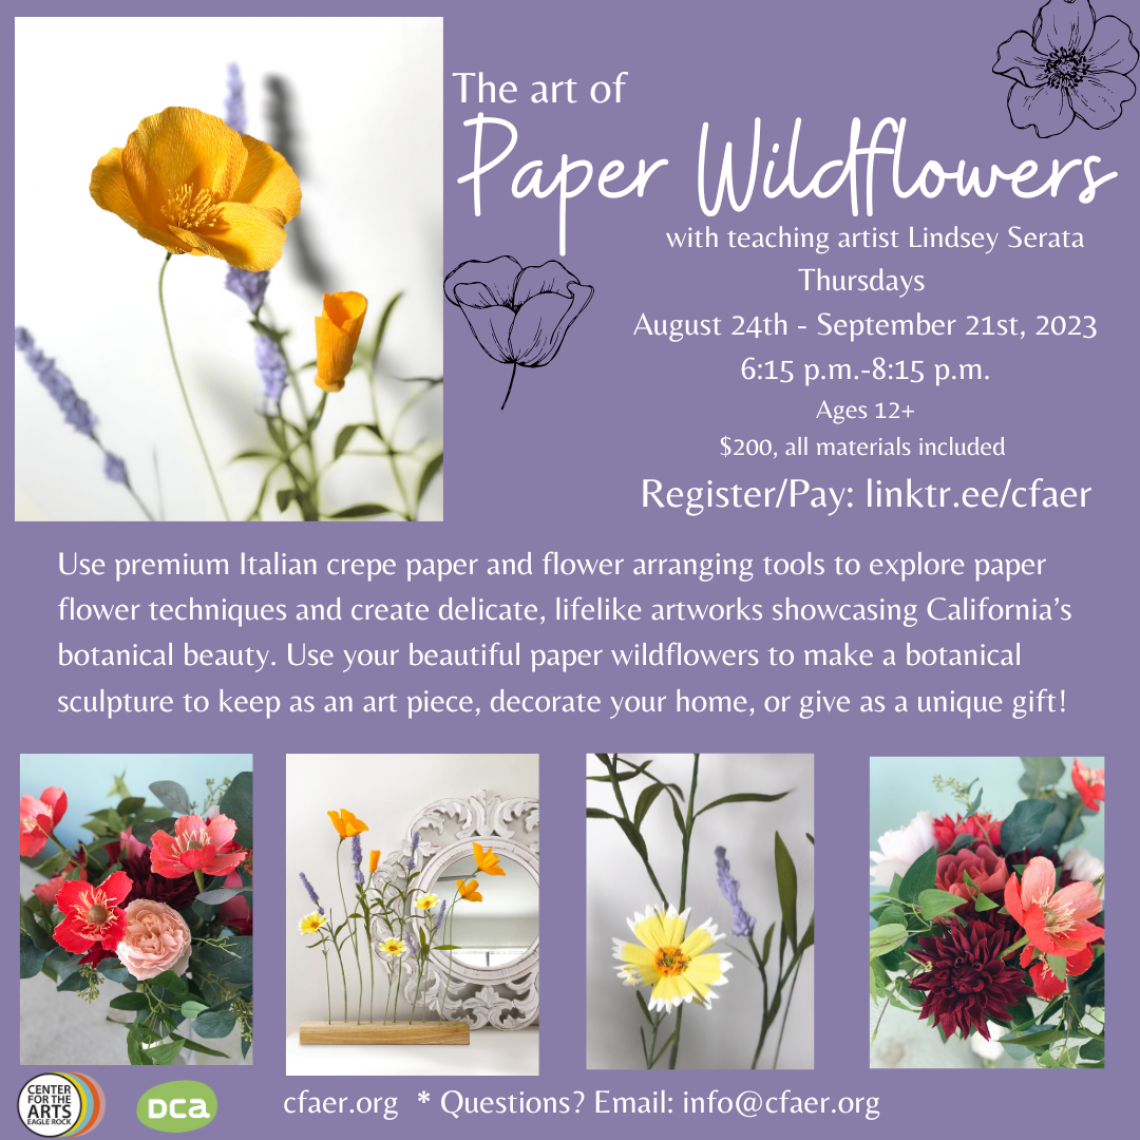 The Art of Paper Wildflowers Workshop